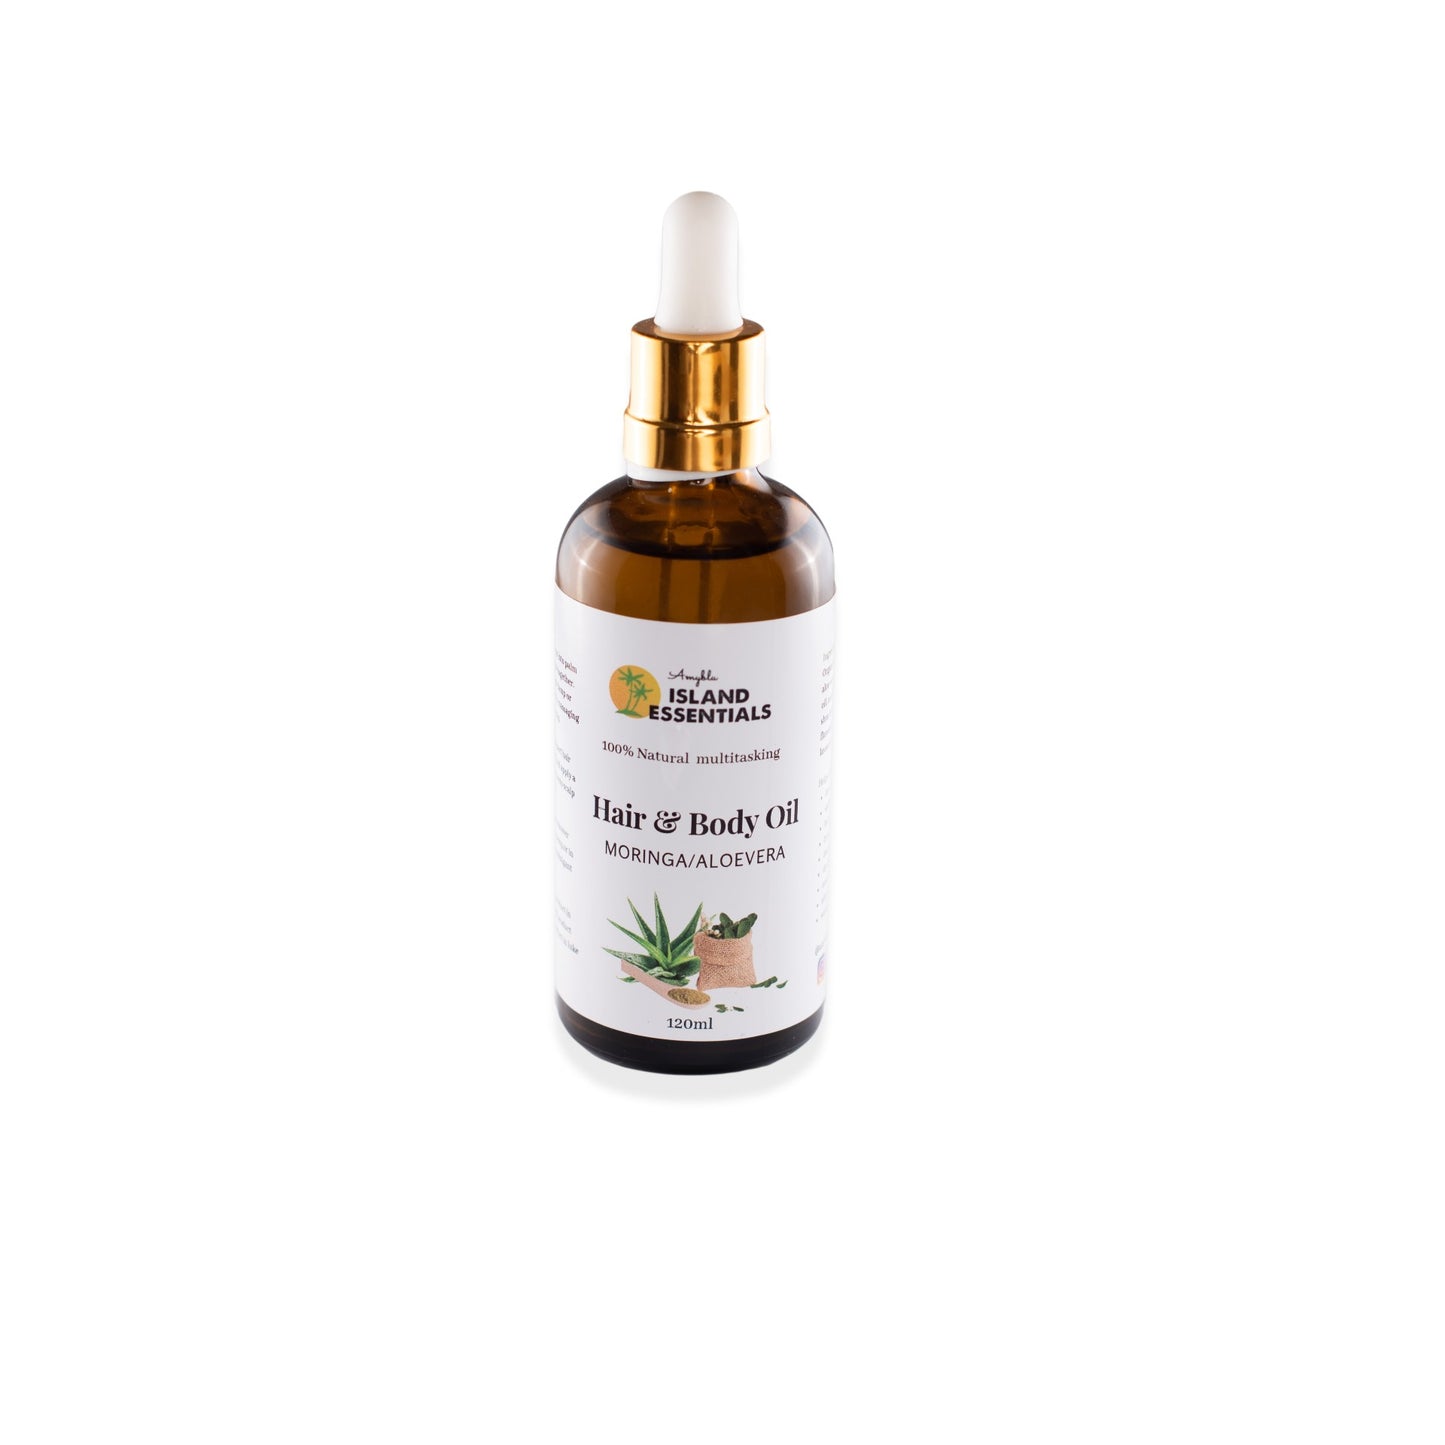 Moringa and Aloe Vera infusion Multitasking Oil for Hair+ Body + Face